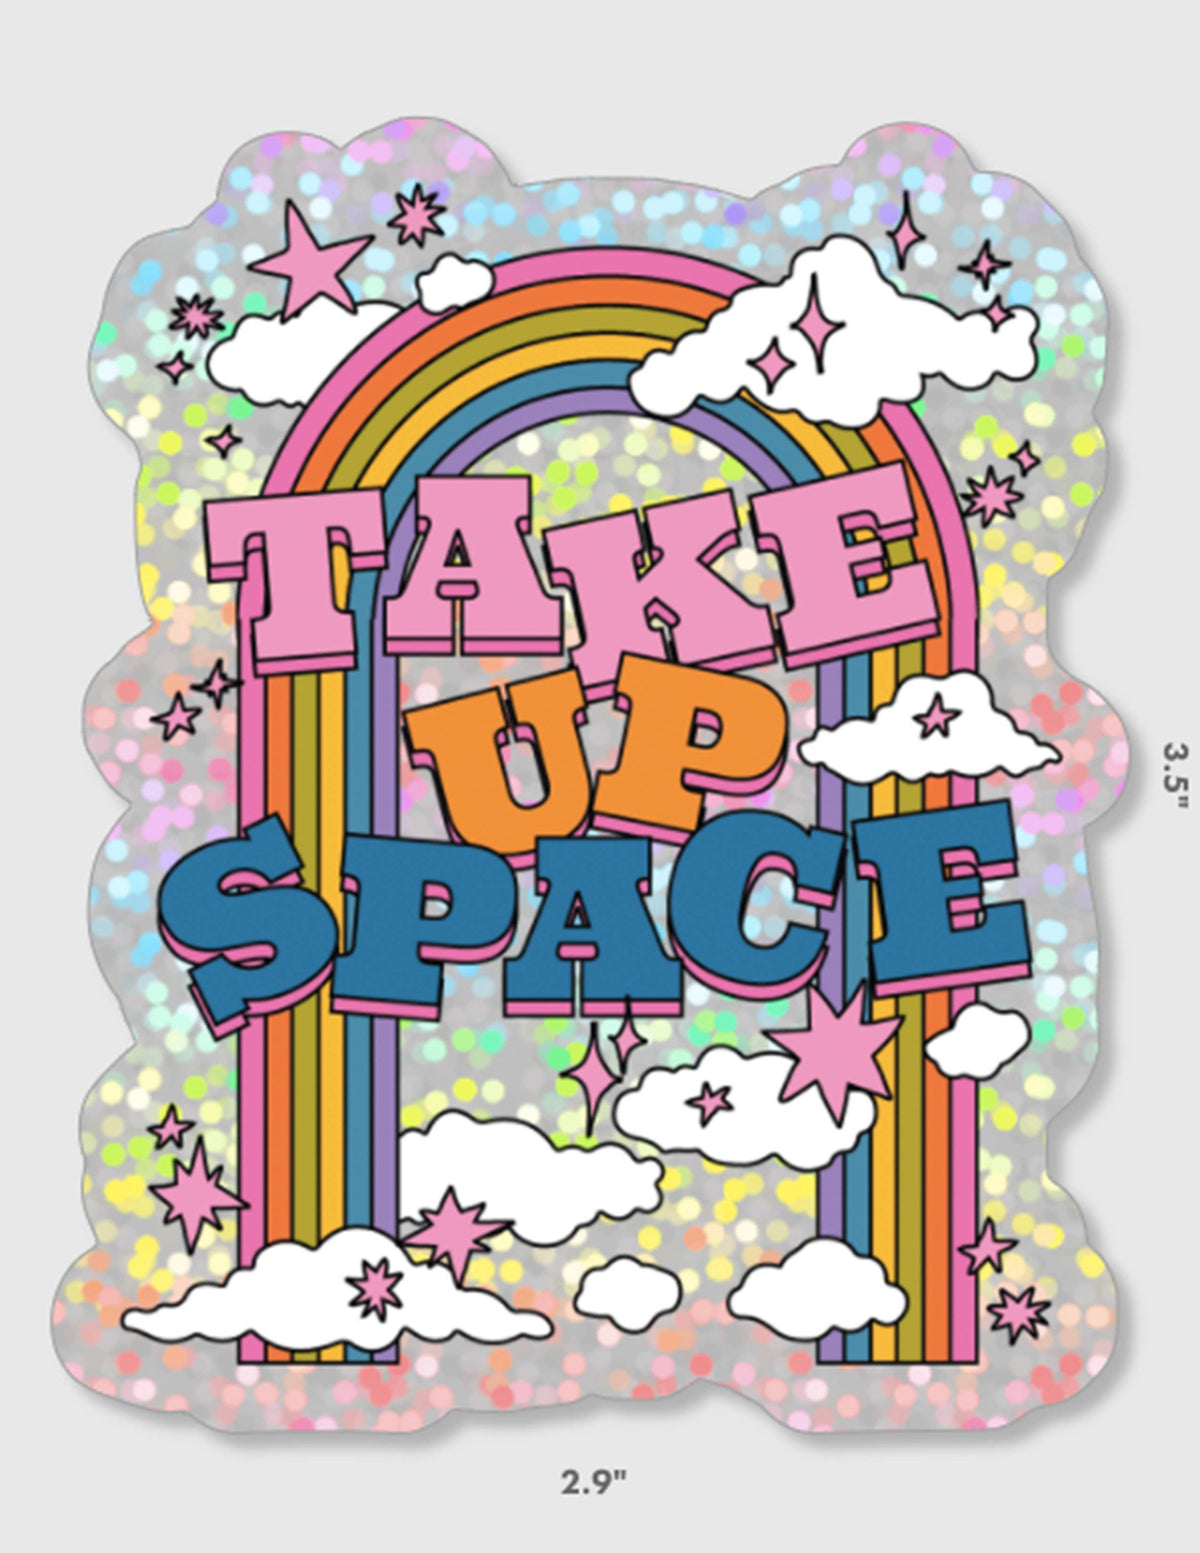 Take Up Space Sticker